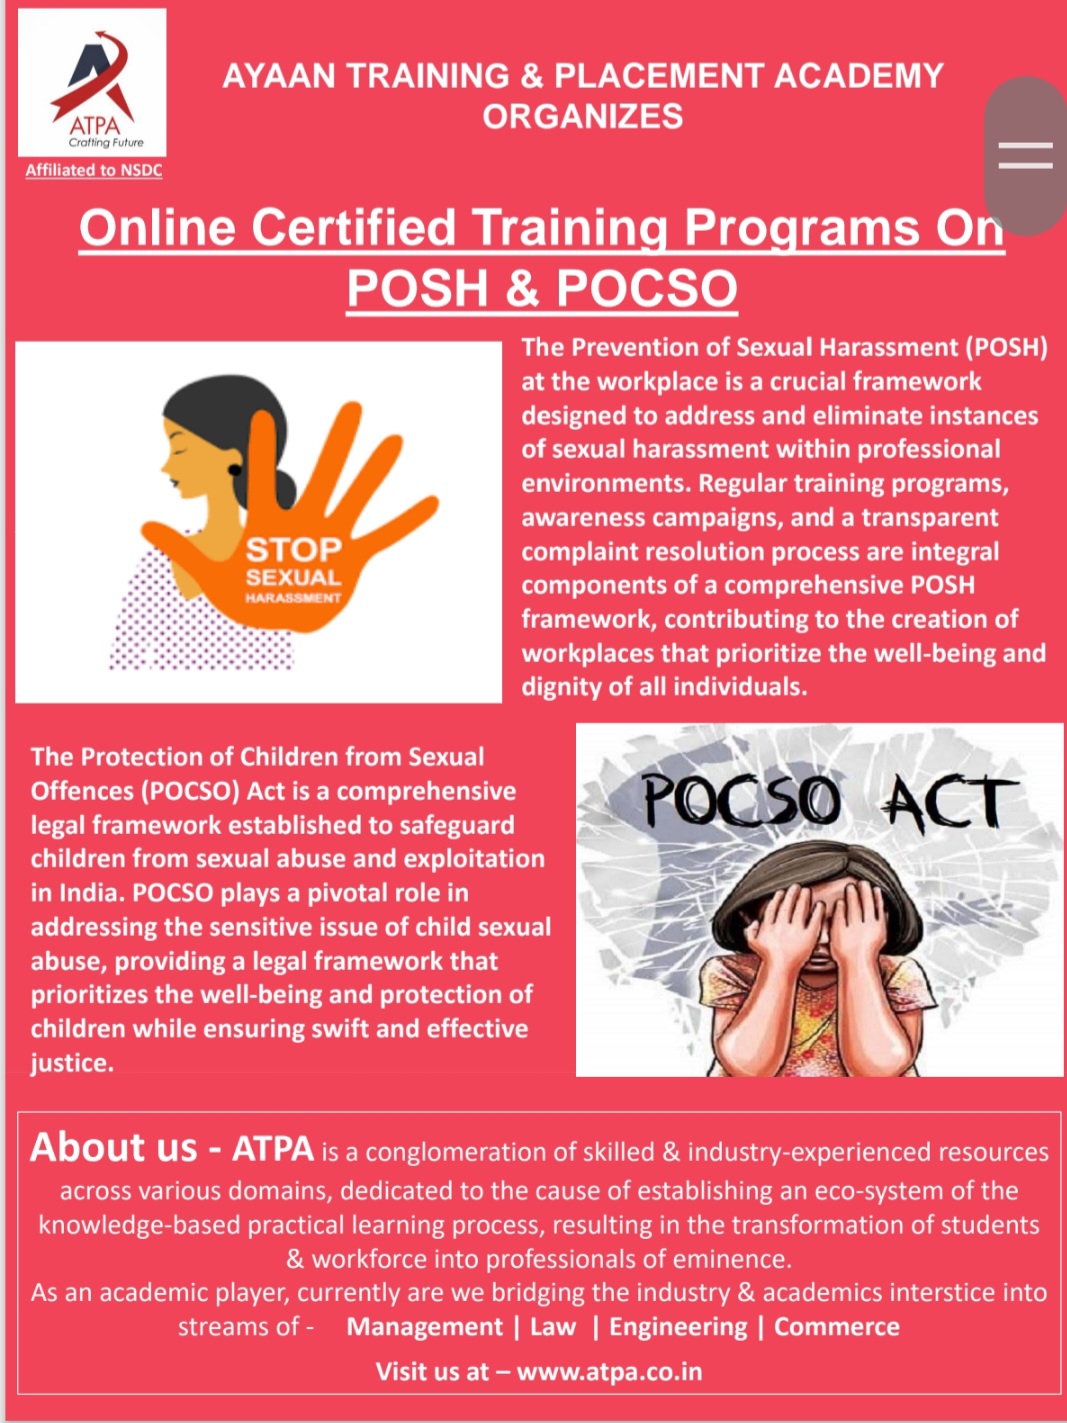 Online Certified Training on POSH